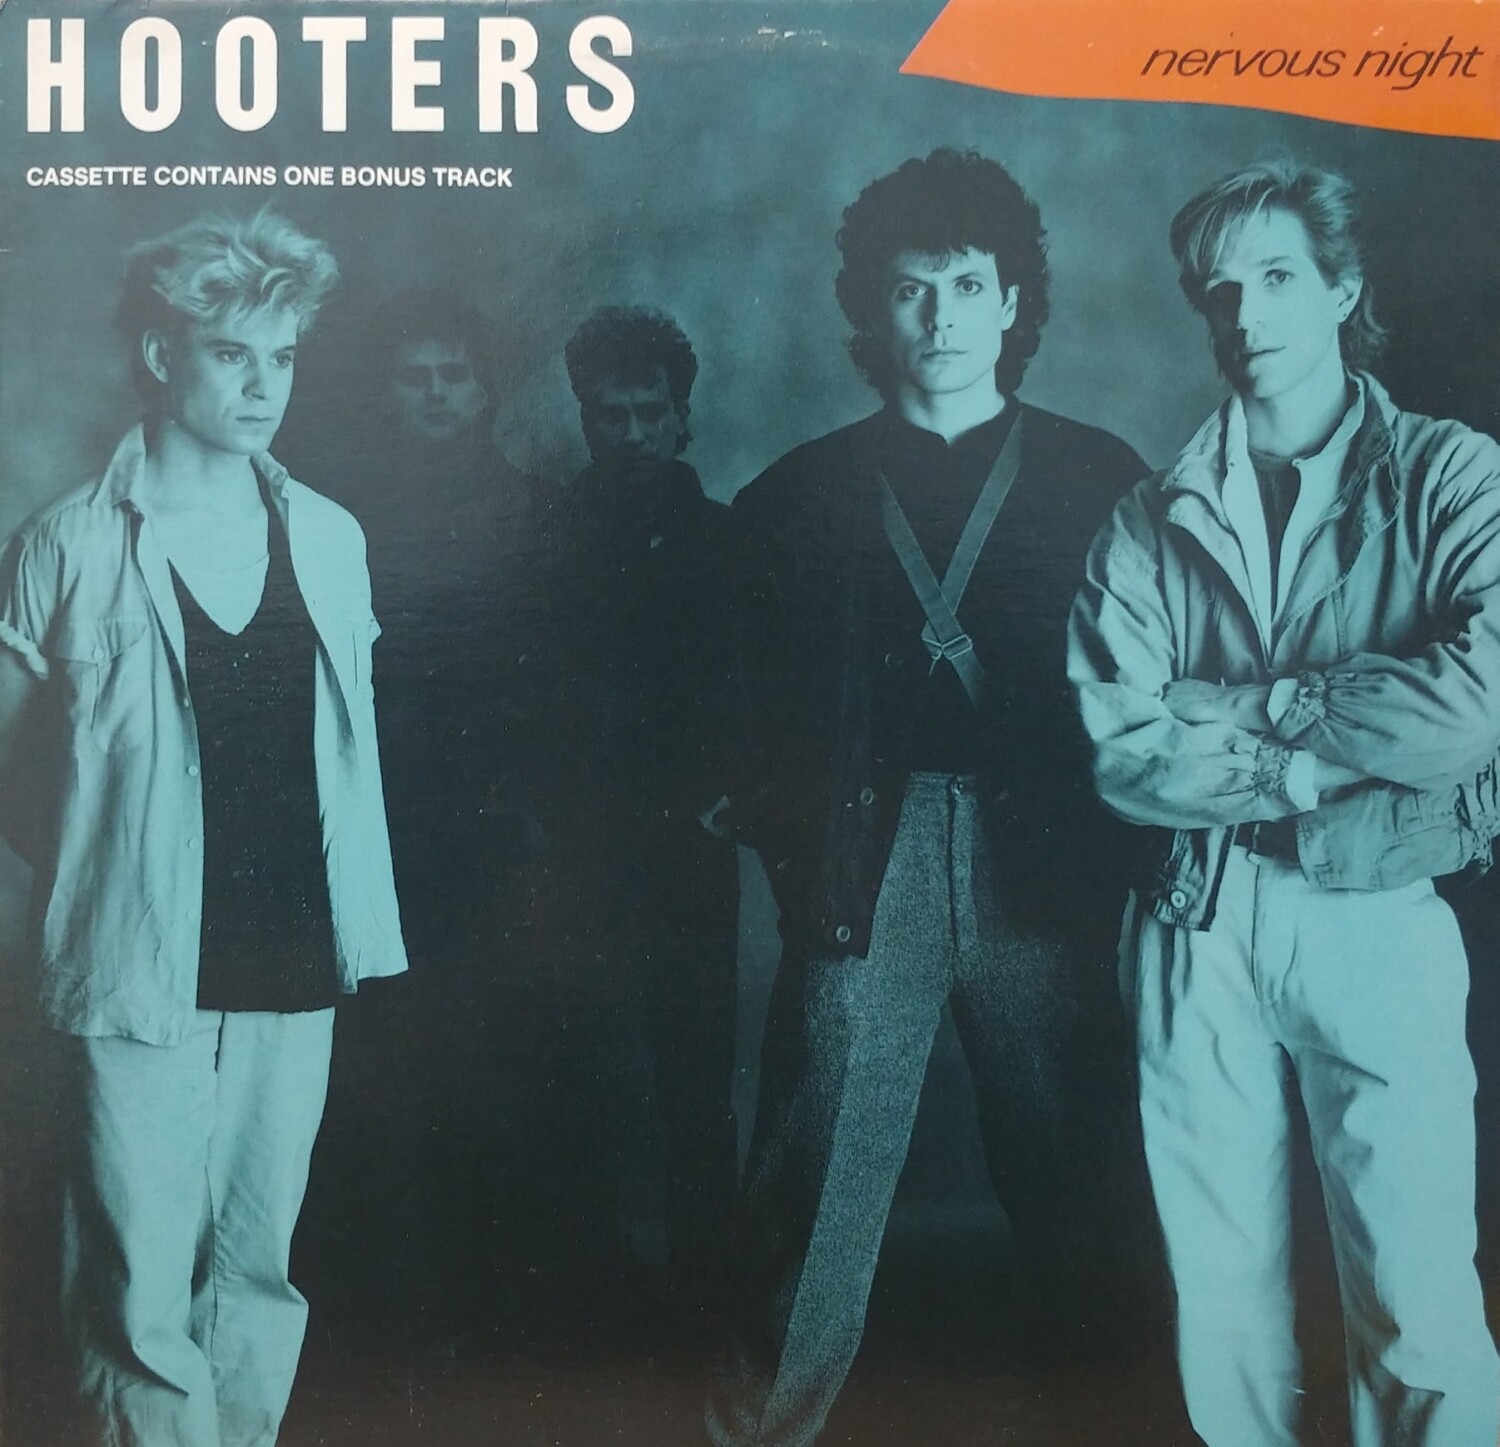 Hooters - Nervous Night